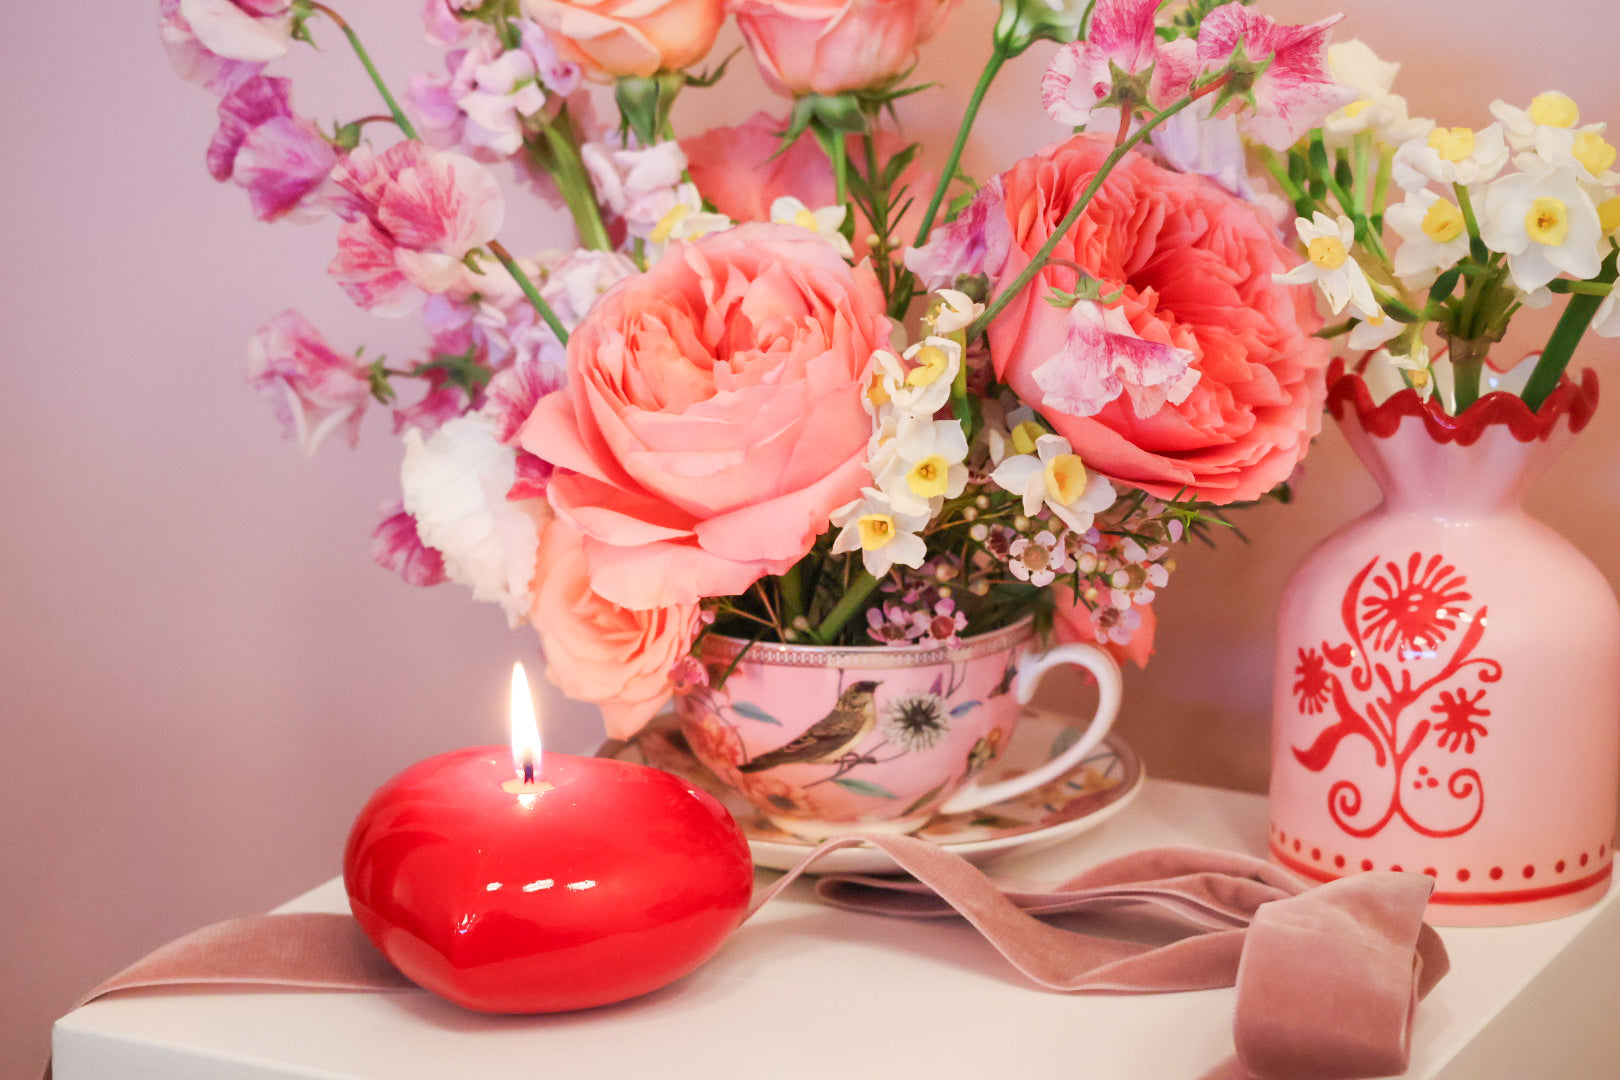 You’re my Cup of Tea Arrangement: Valentines Day EXCLUSIVE